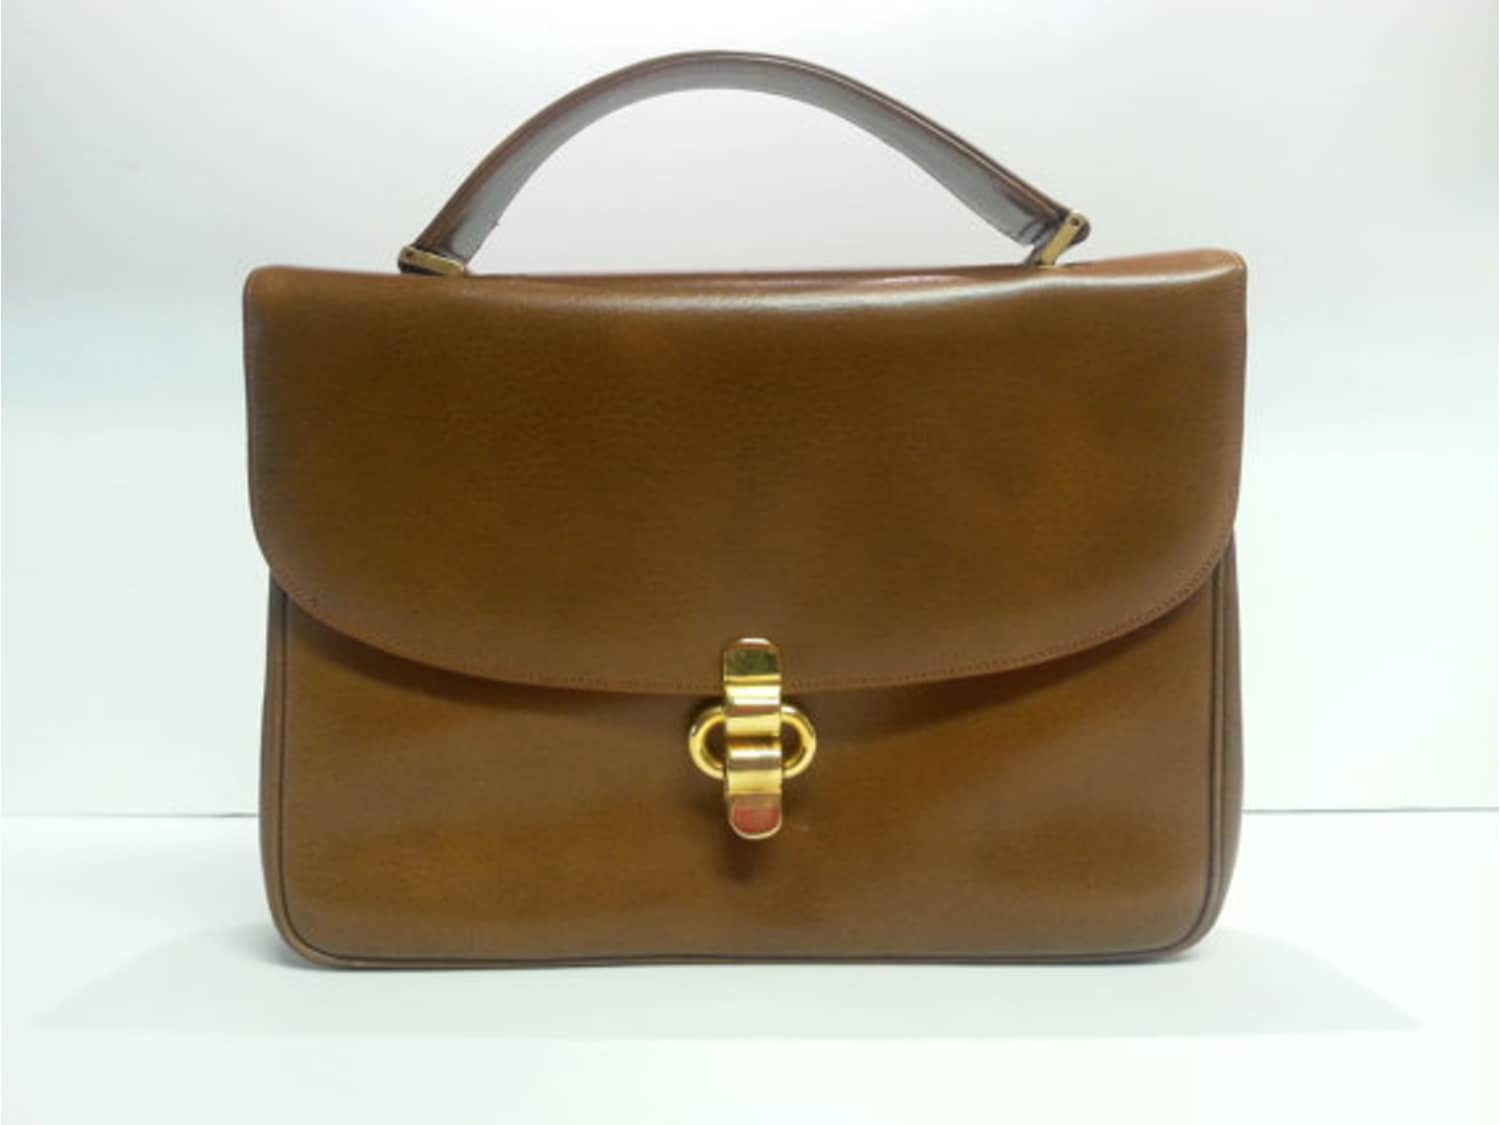 Vintage FRENCH Bienen-Davis Leather Handbag - Apartment Therapy's Bazaar.